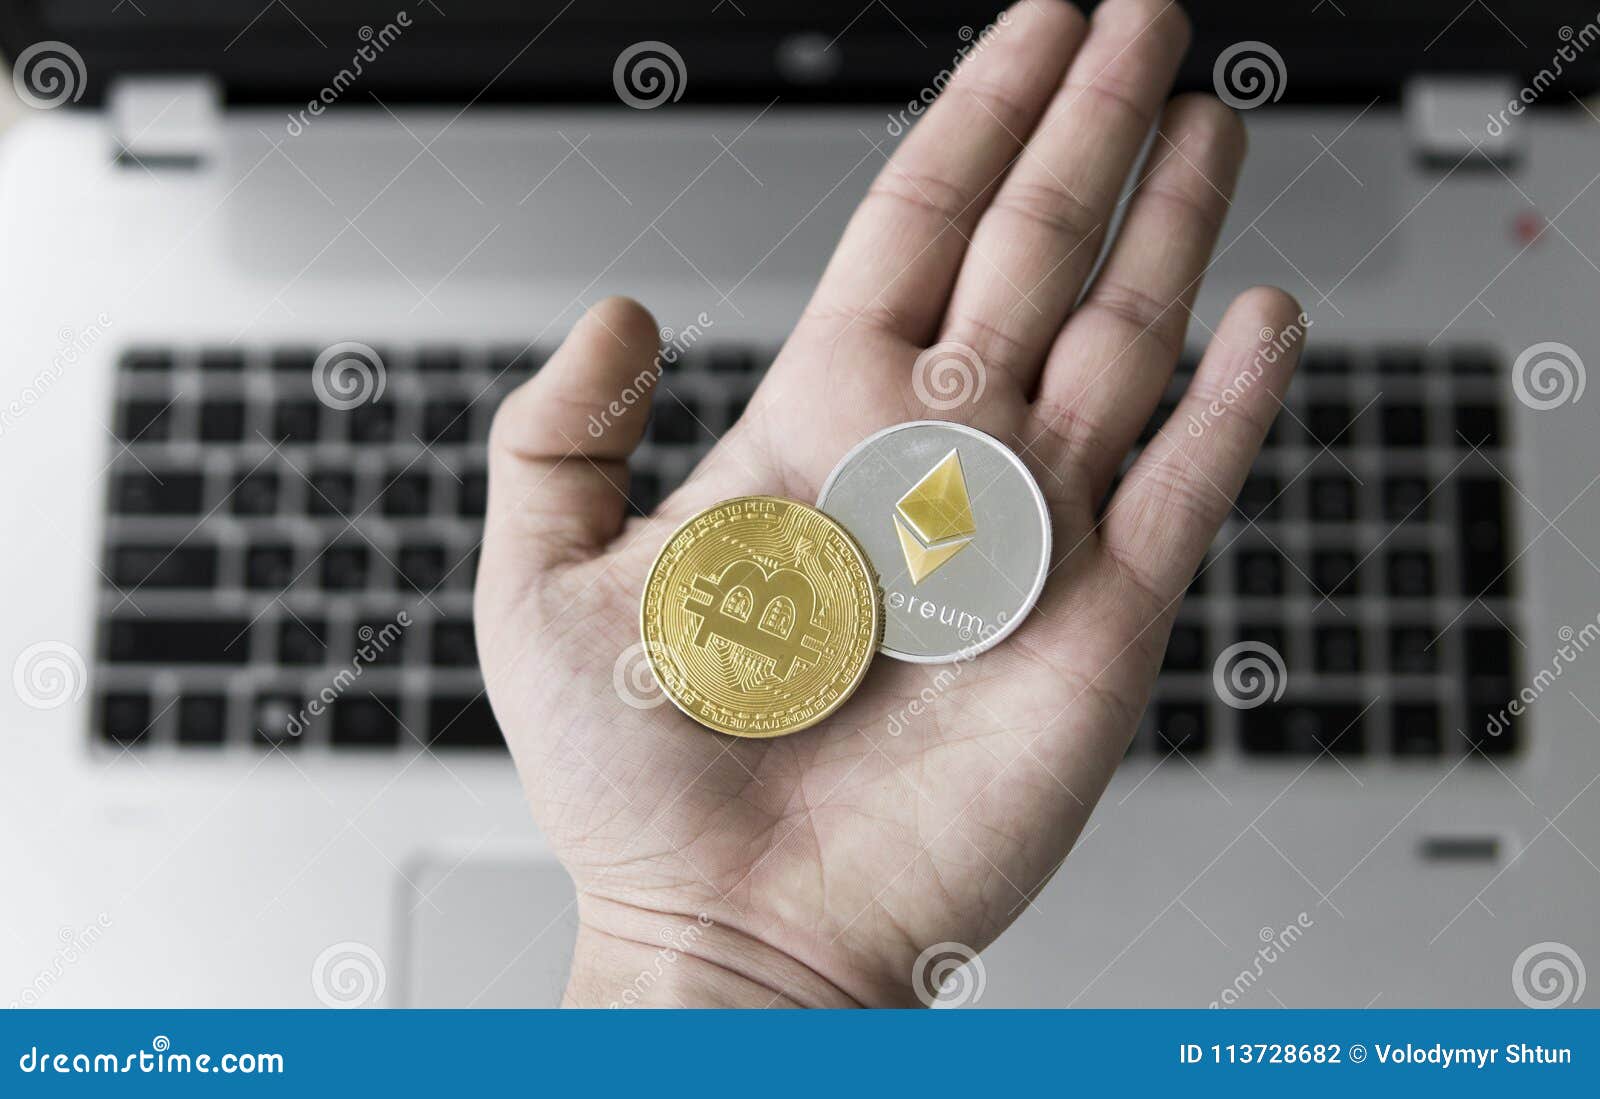 bitcoin comercial pentru ethereum)